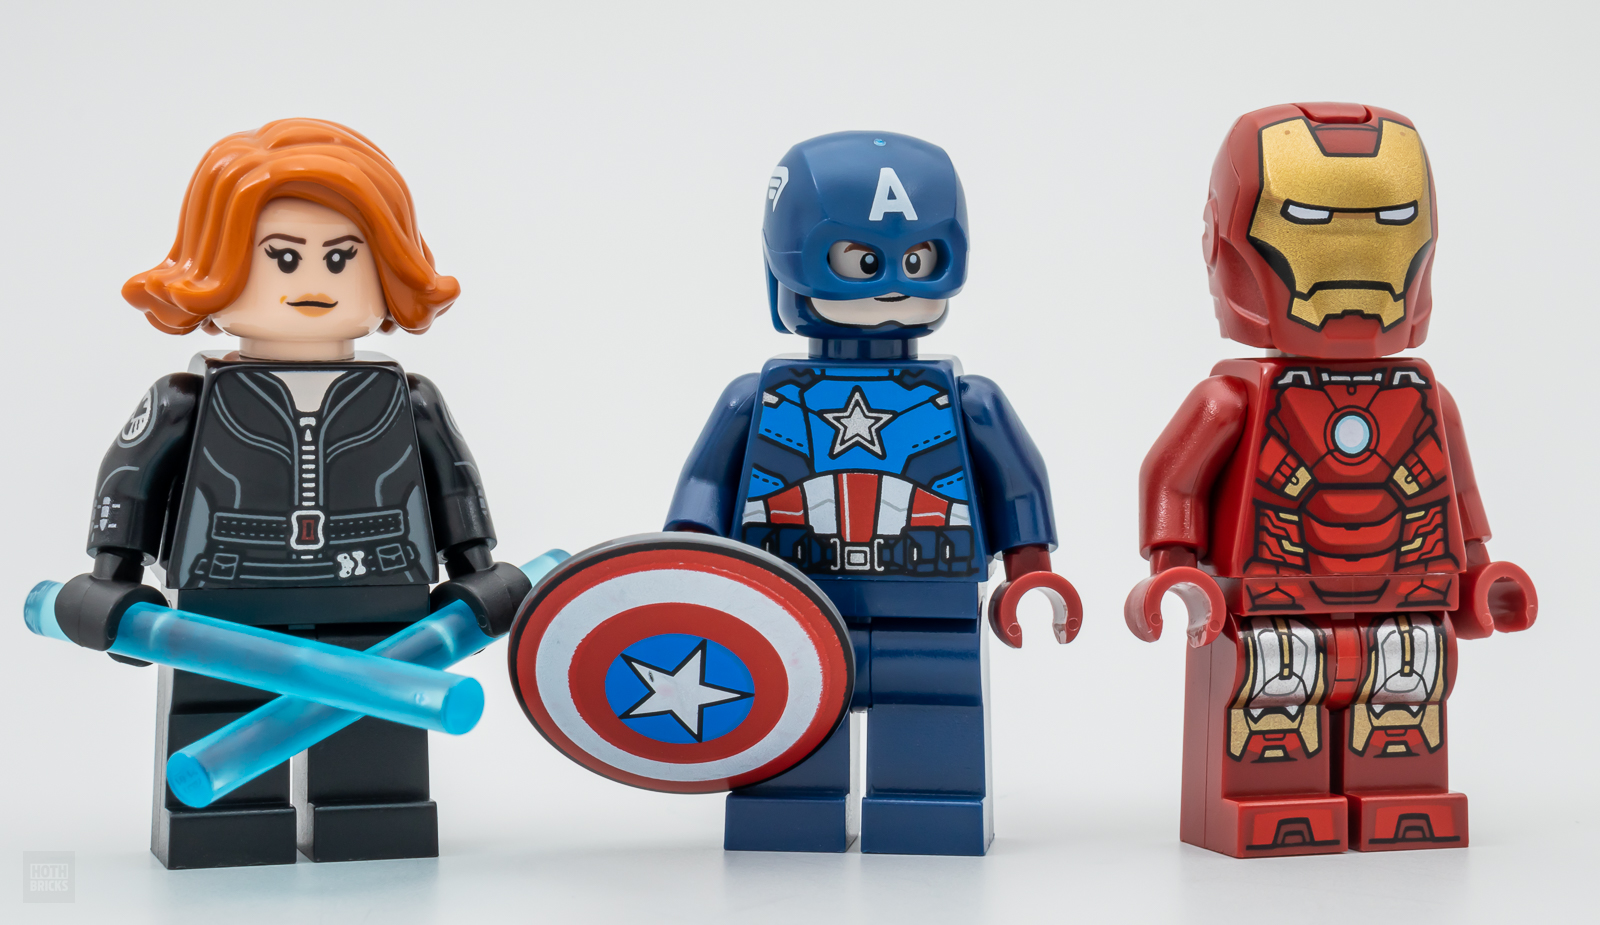 LEGO Marvel Super Heroes The Avengers Quinjet 76248